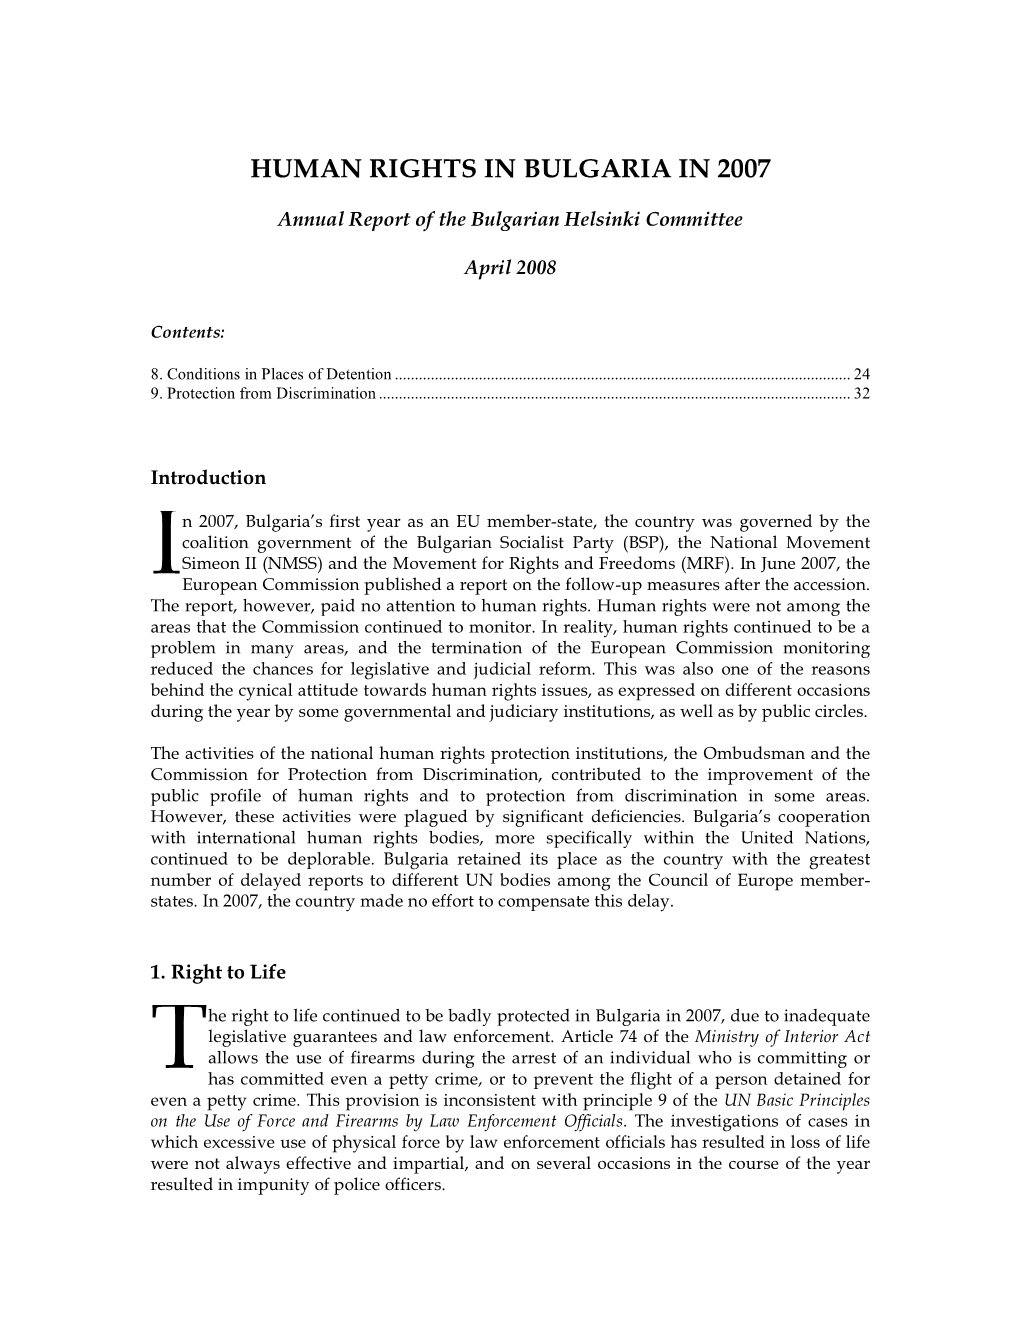 Human Rights in Bulgaria in 2007